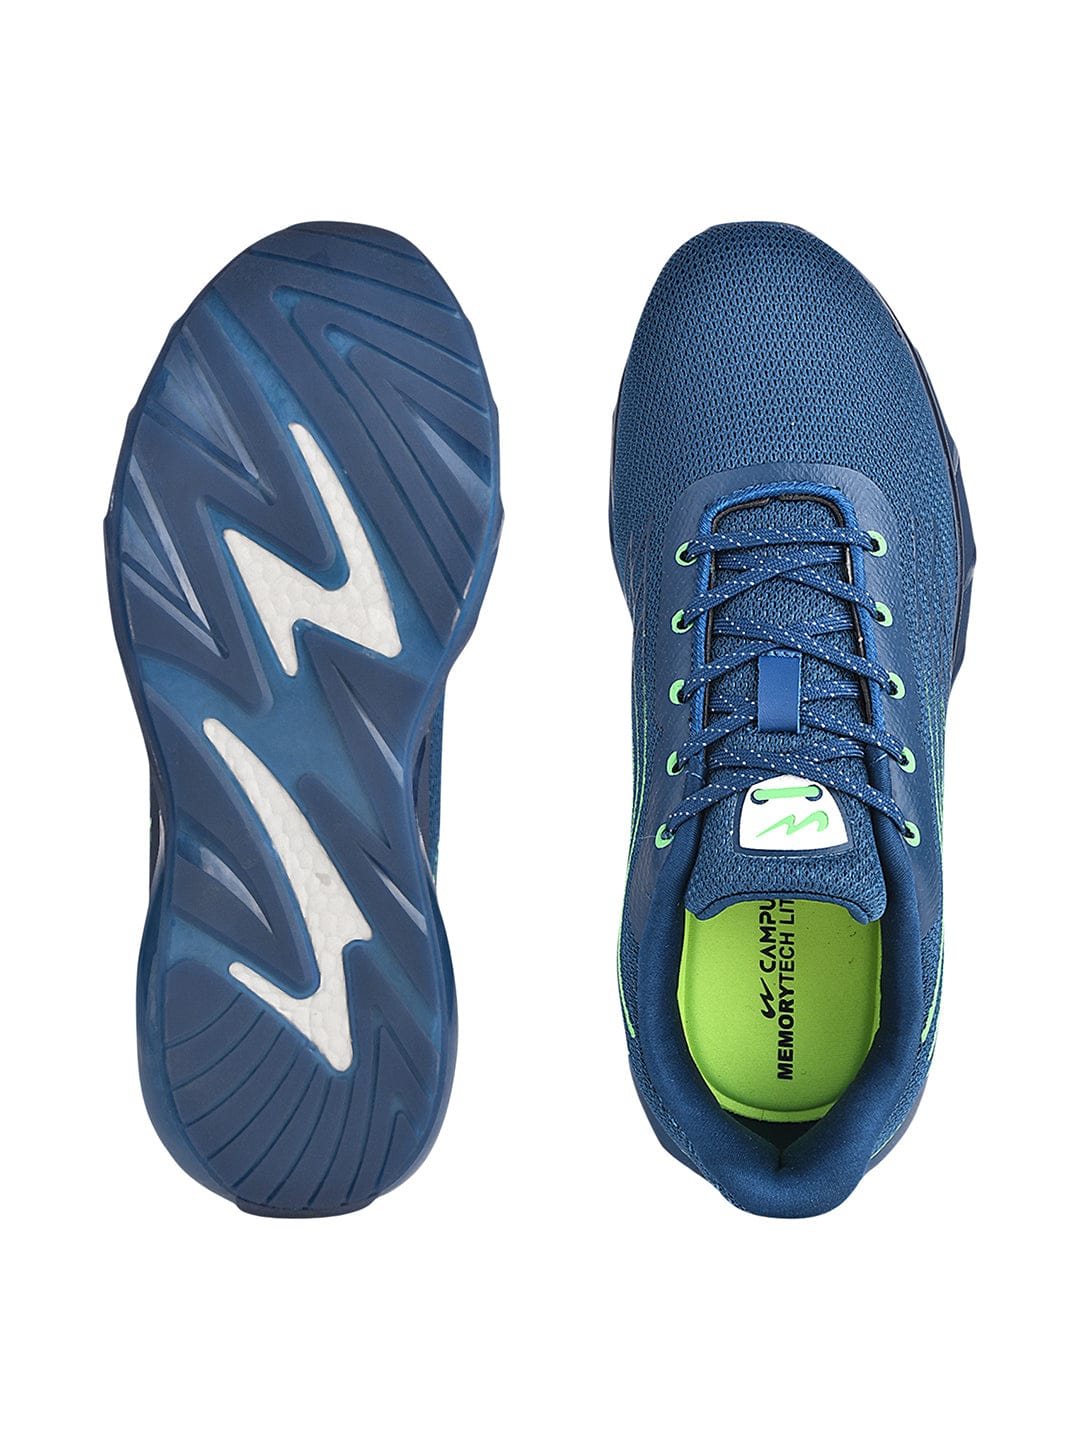 Buy KIZER Blue Men's Running Shoes online | Campus Shoes